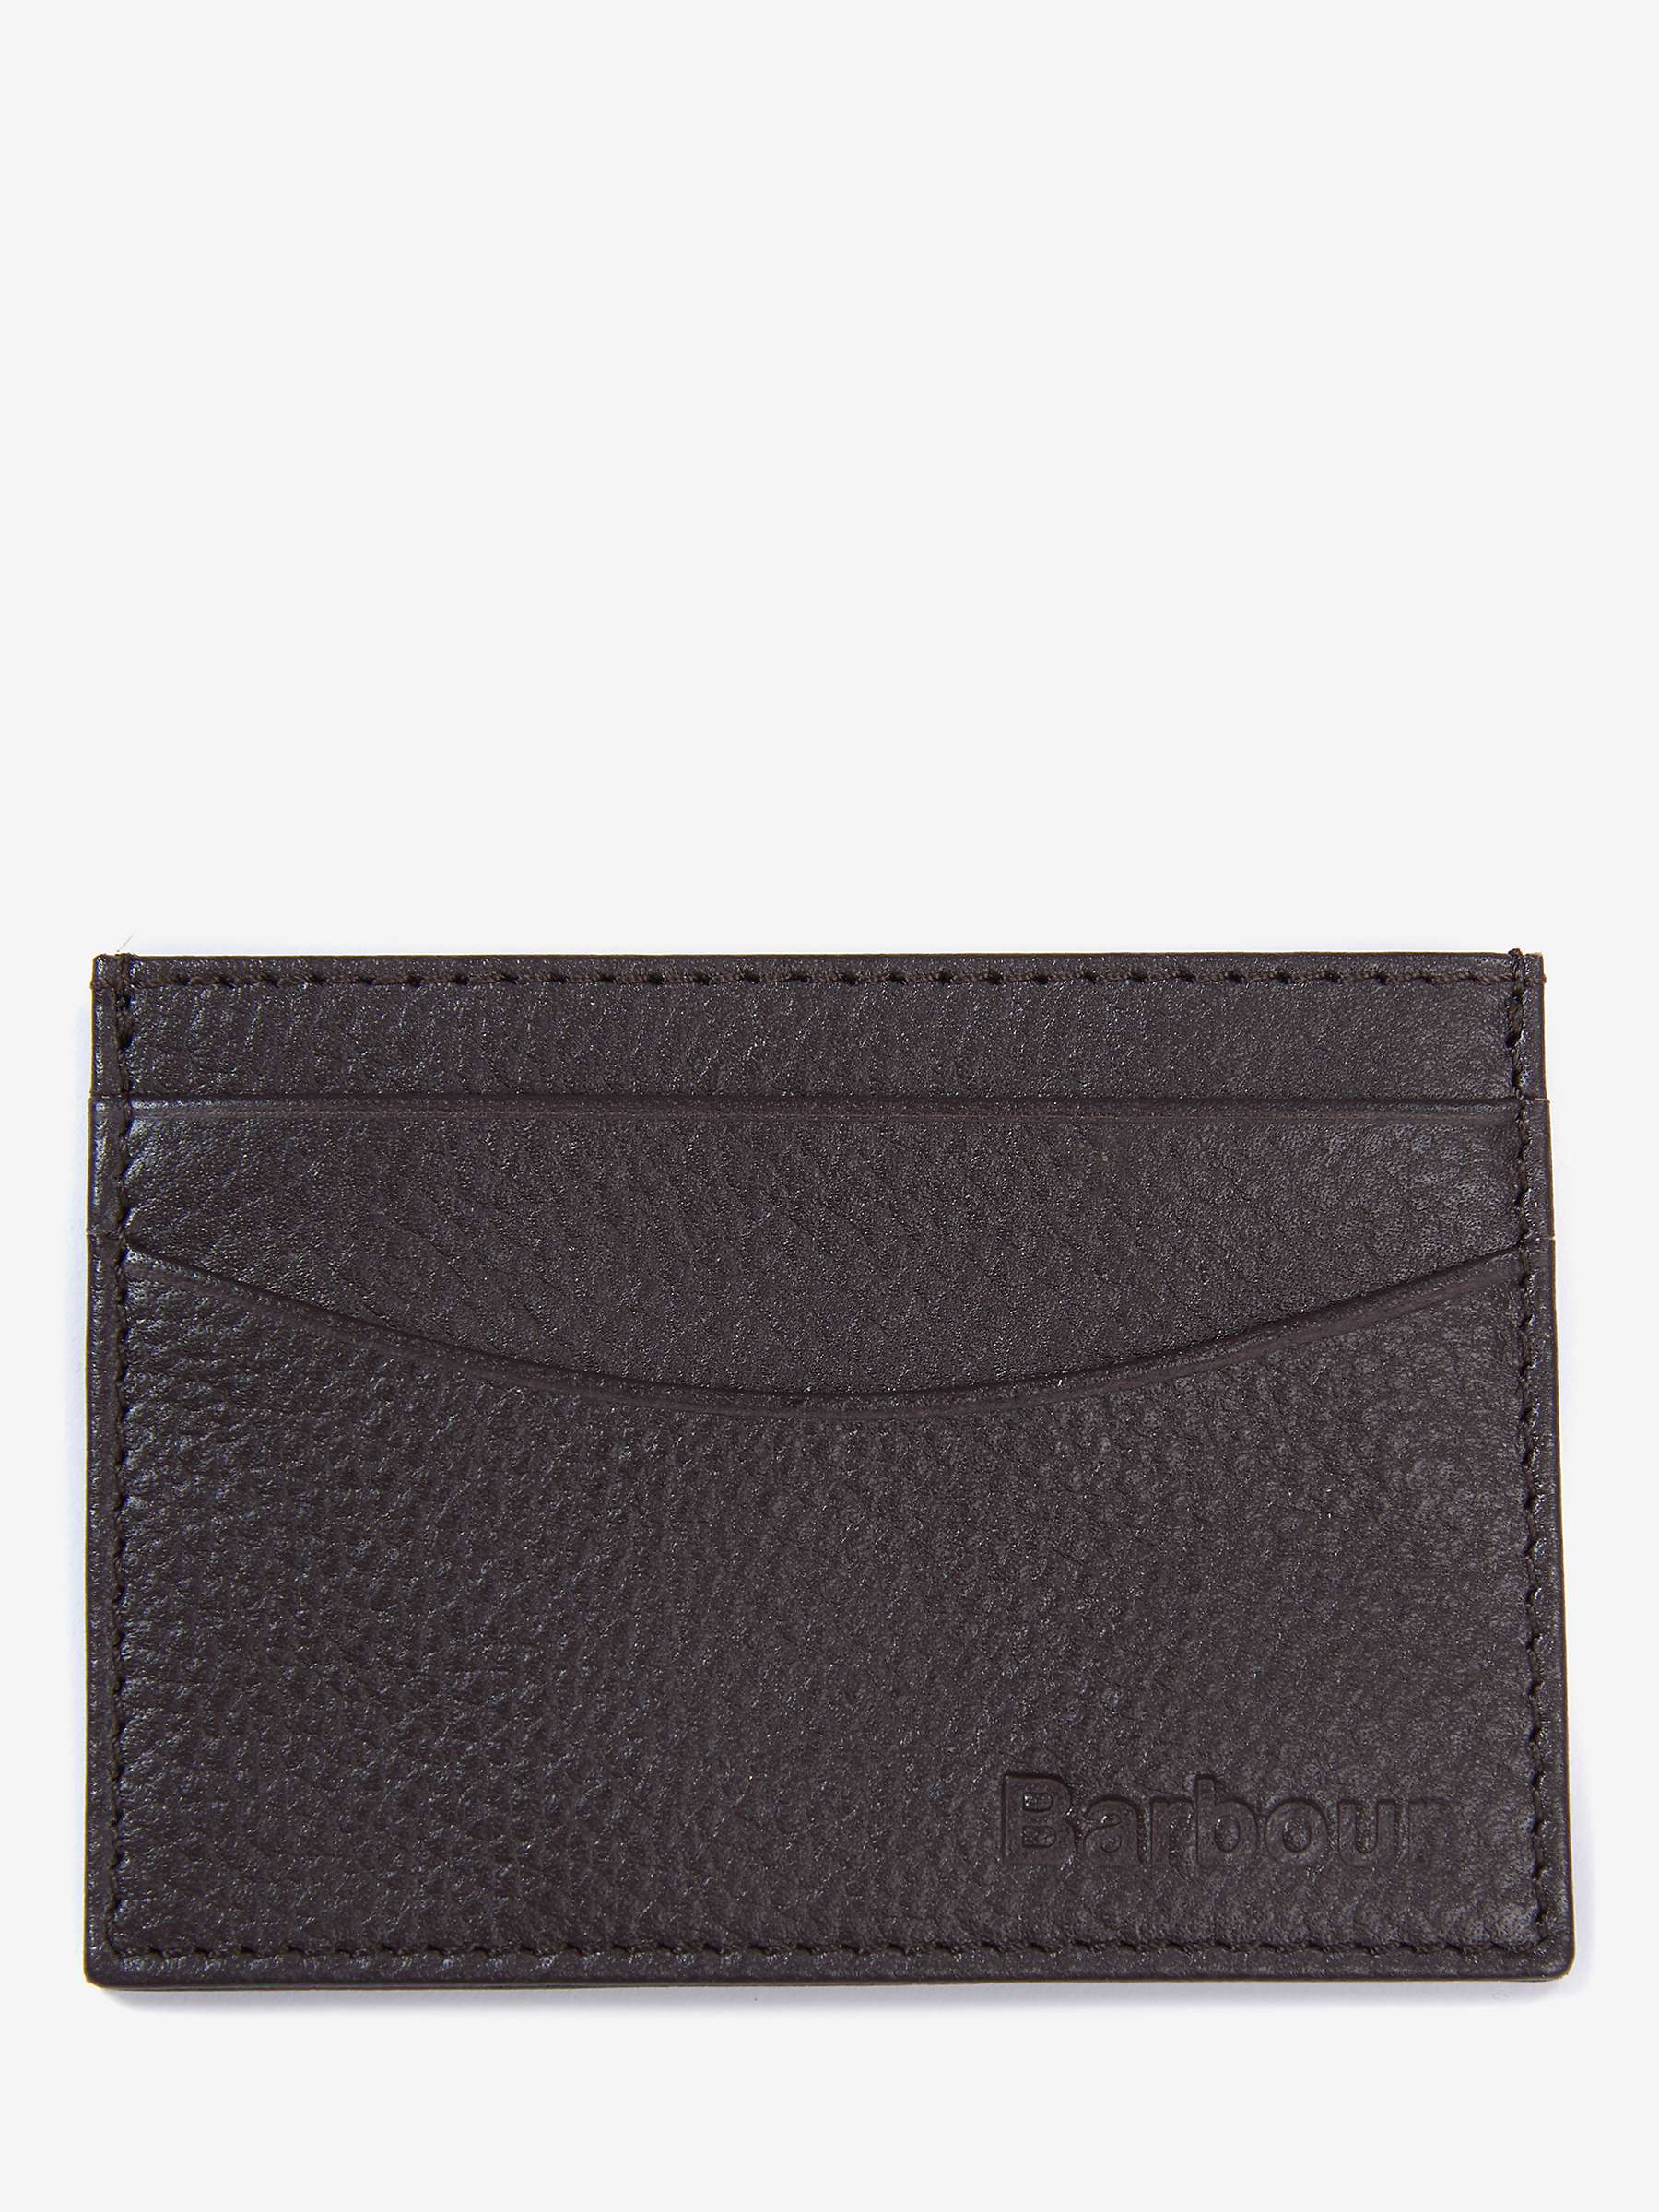 Buy Barbour Amble Leather Card Holder, Dark Brown Online at johnlewis.com